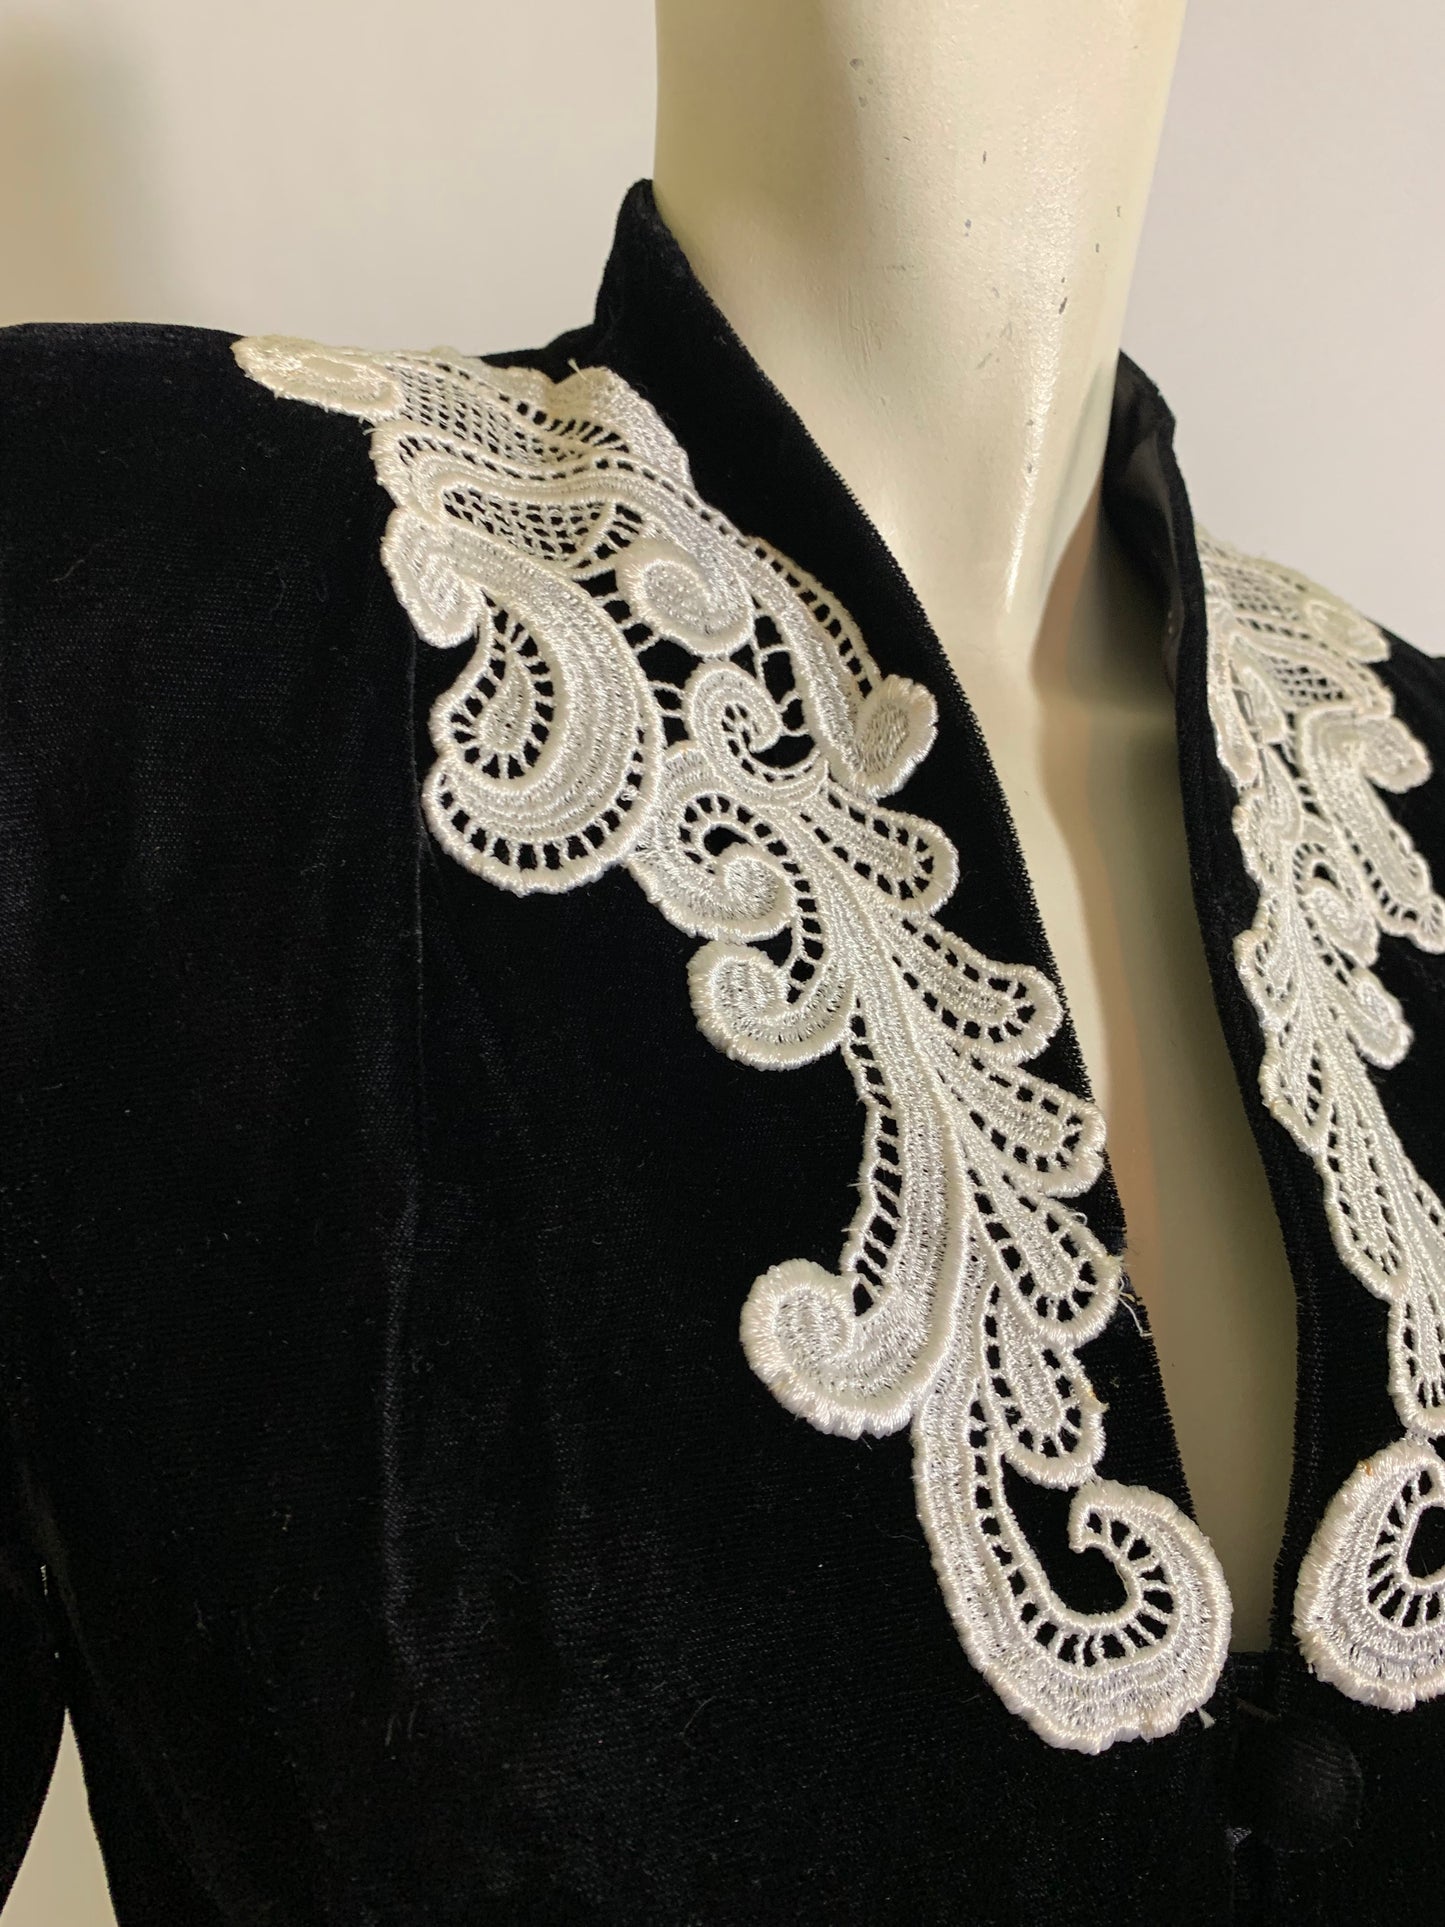 Noir Diva Black Velvet Nipped Waist Jacket with Lace Trim circa 1980s